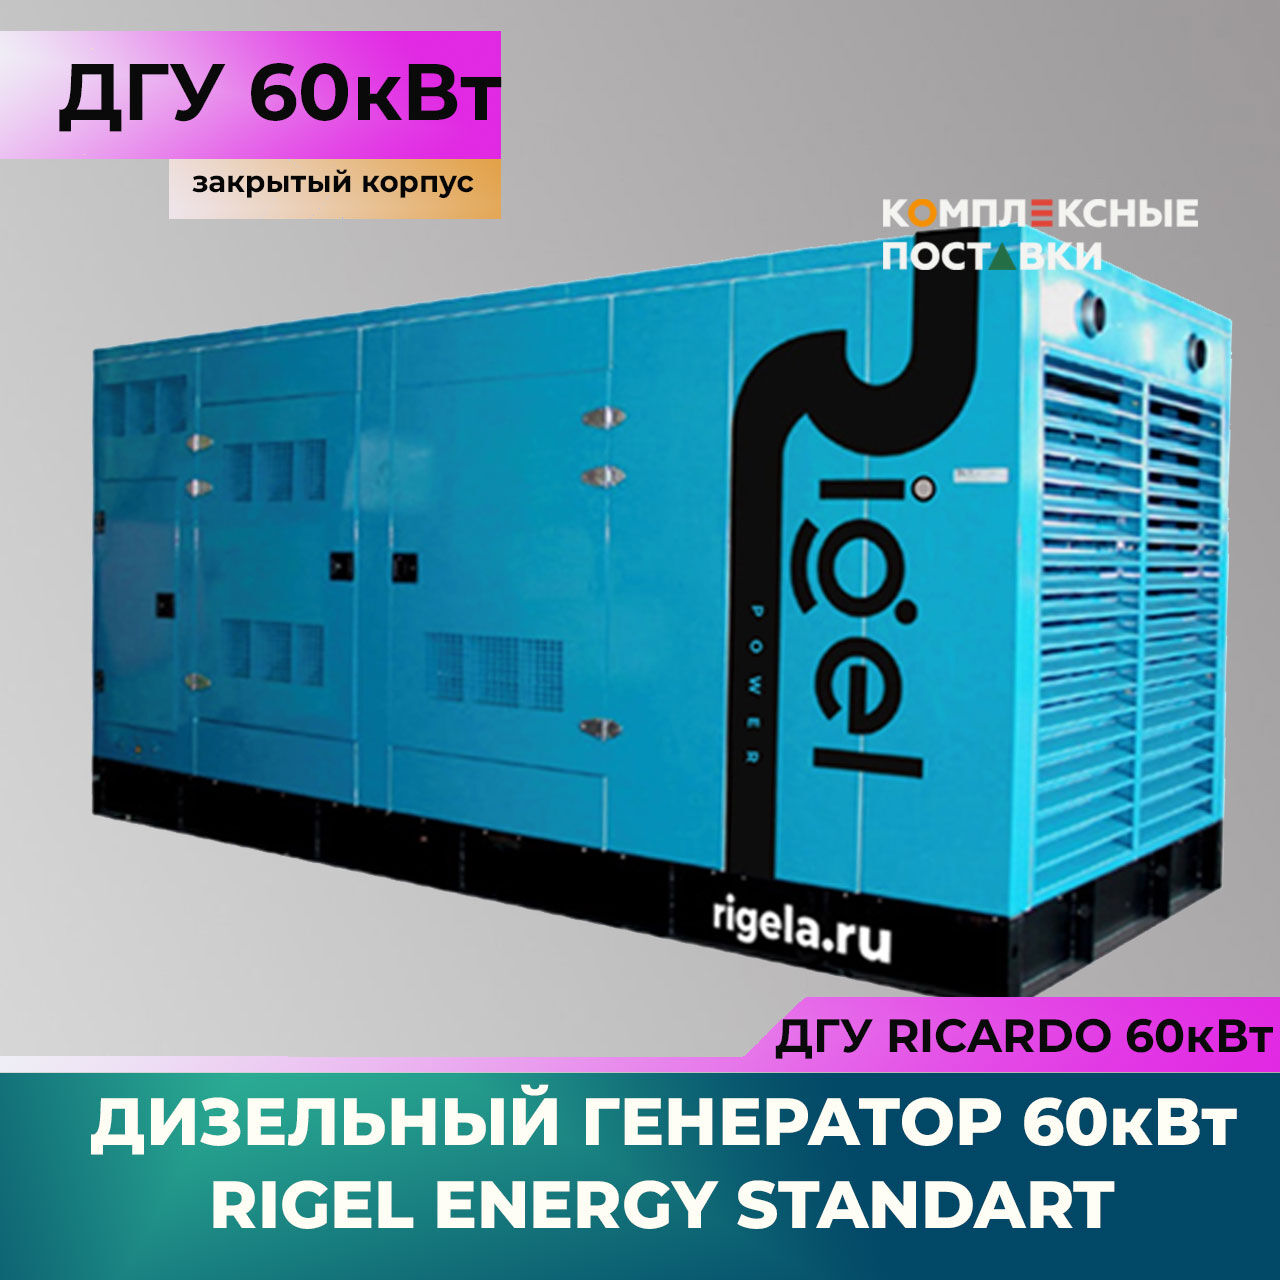 ДГУ 60 кВт Ricardo R Дизель-генератор Rigel Energy Standard RES 60 (60 кВт, Ricardo R) закрытый